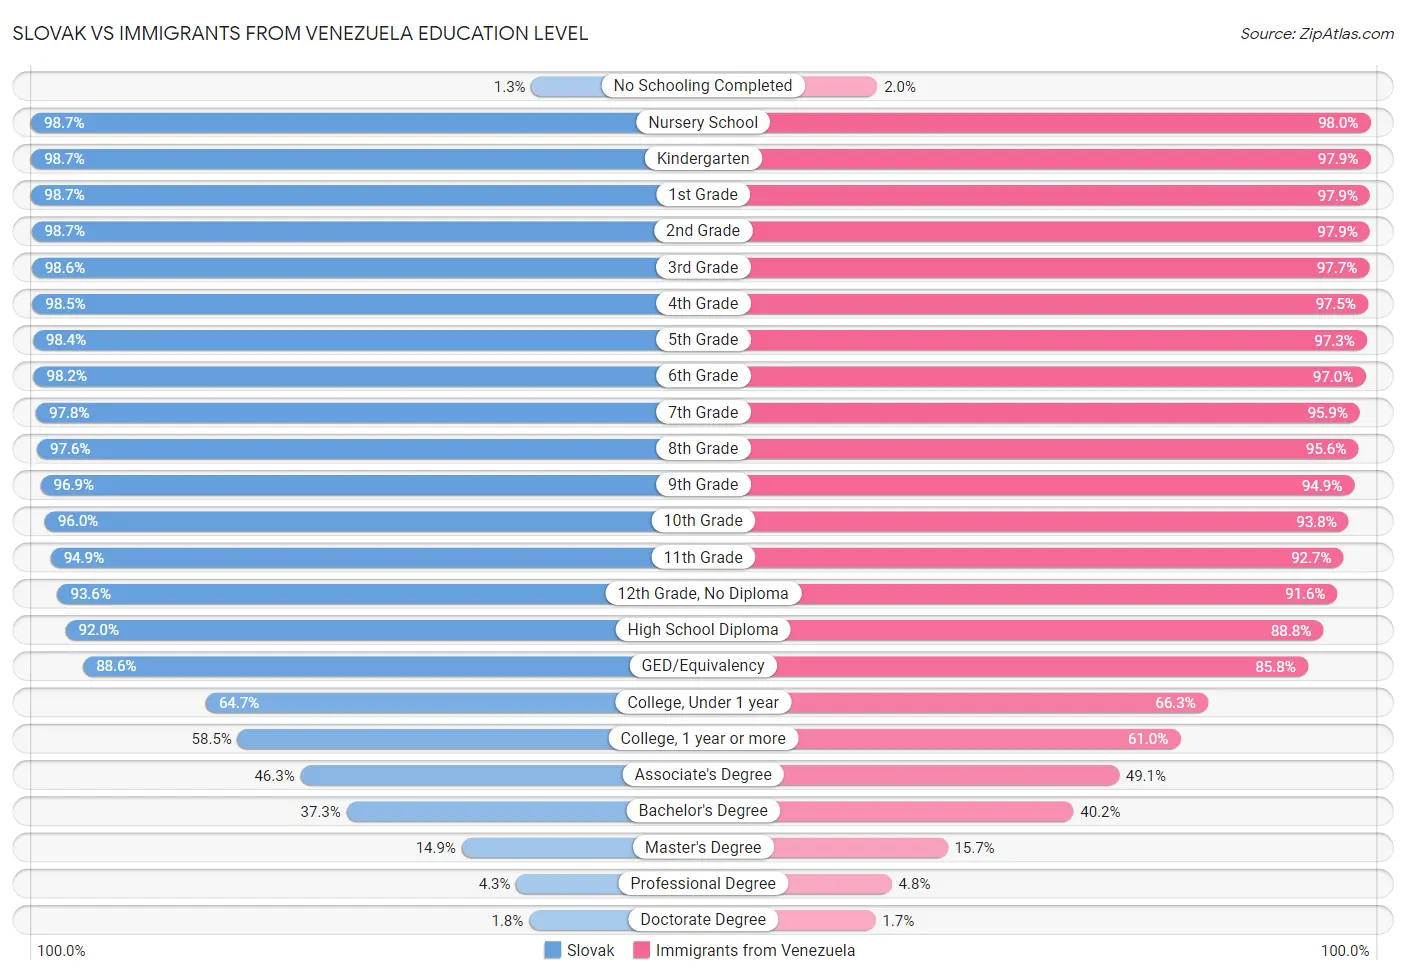 Slovak vs Immigrants from Venezuela Education Level